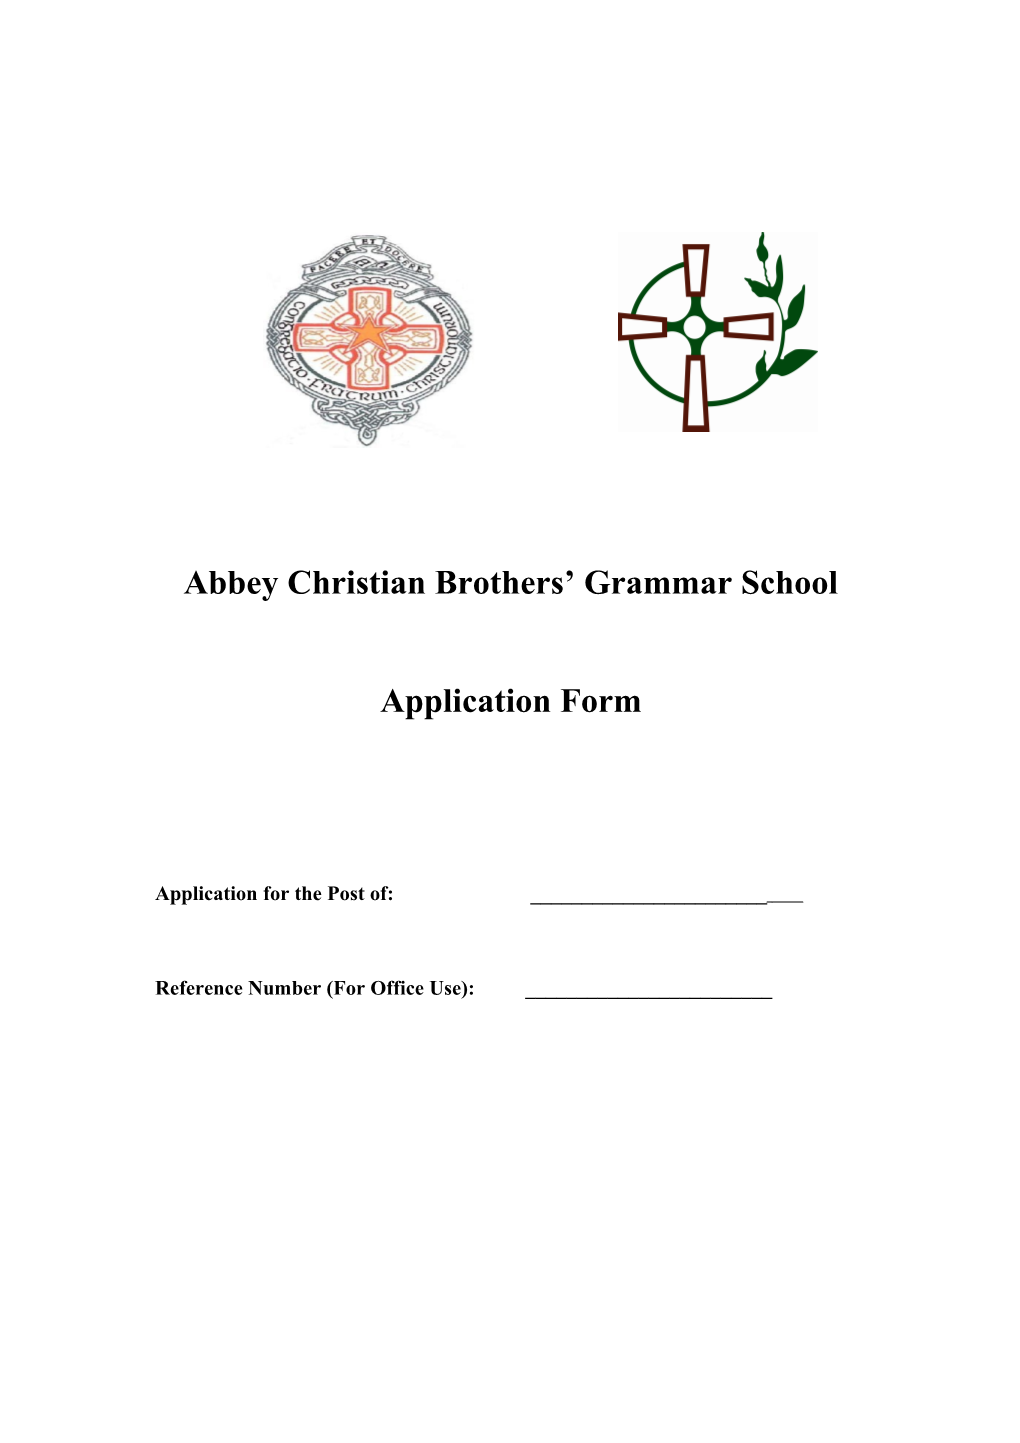 Abbey Christian Brothers Grammar School